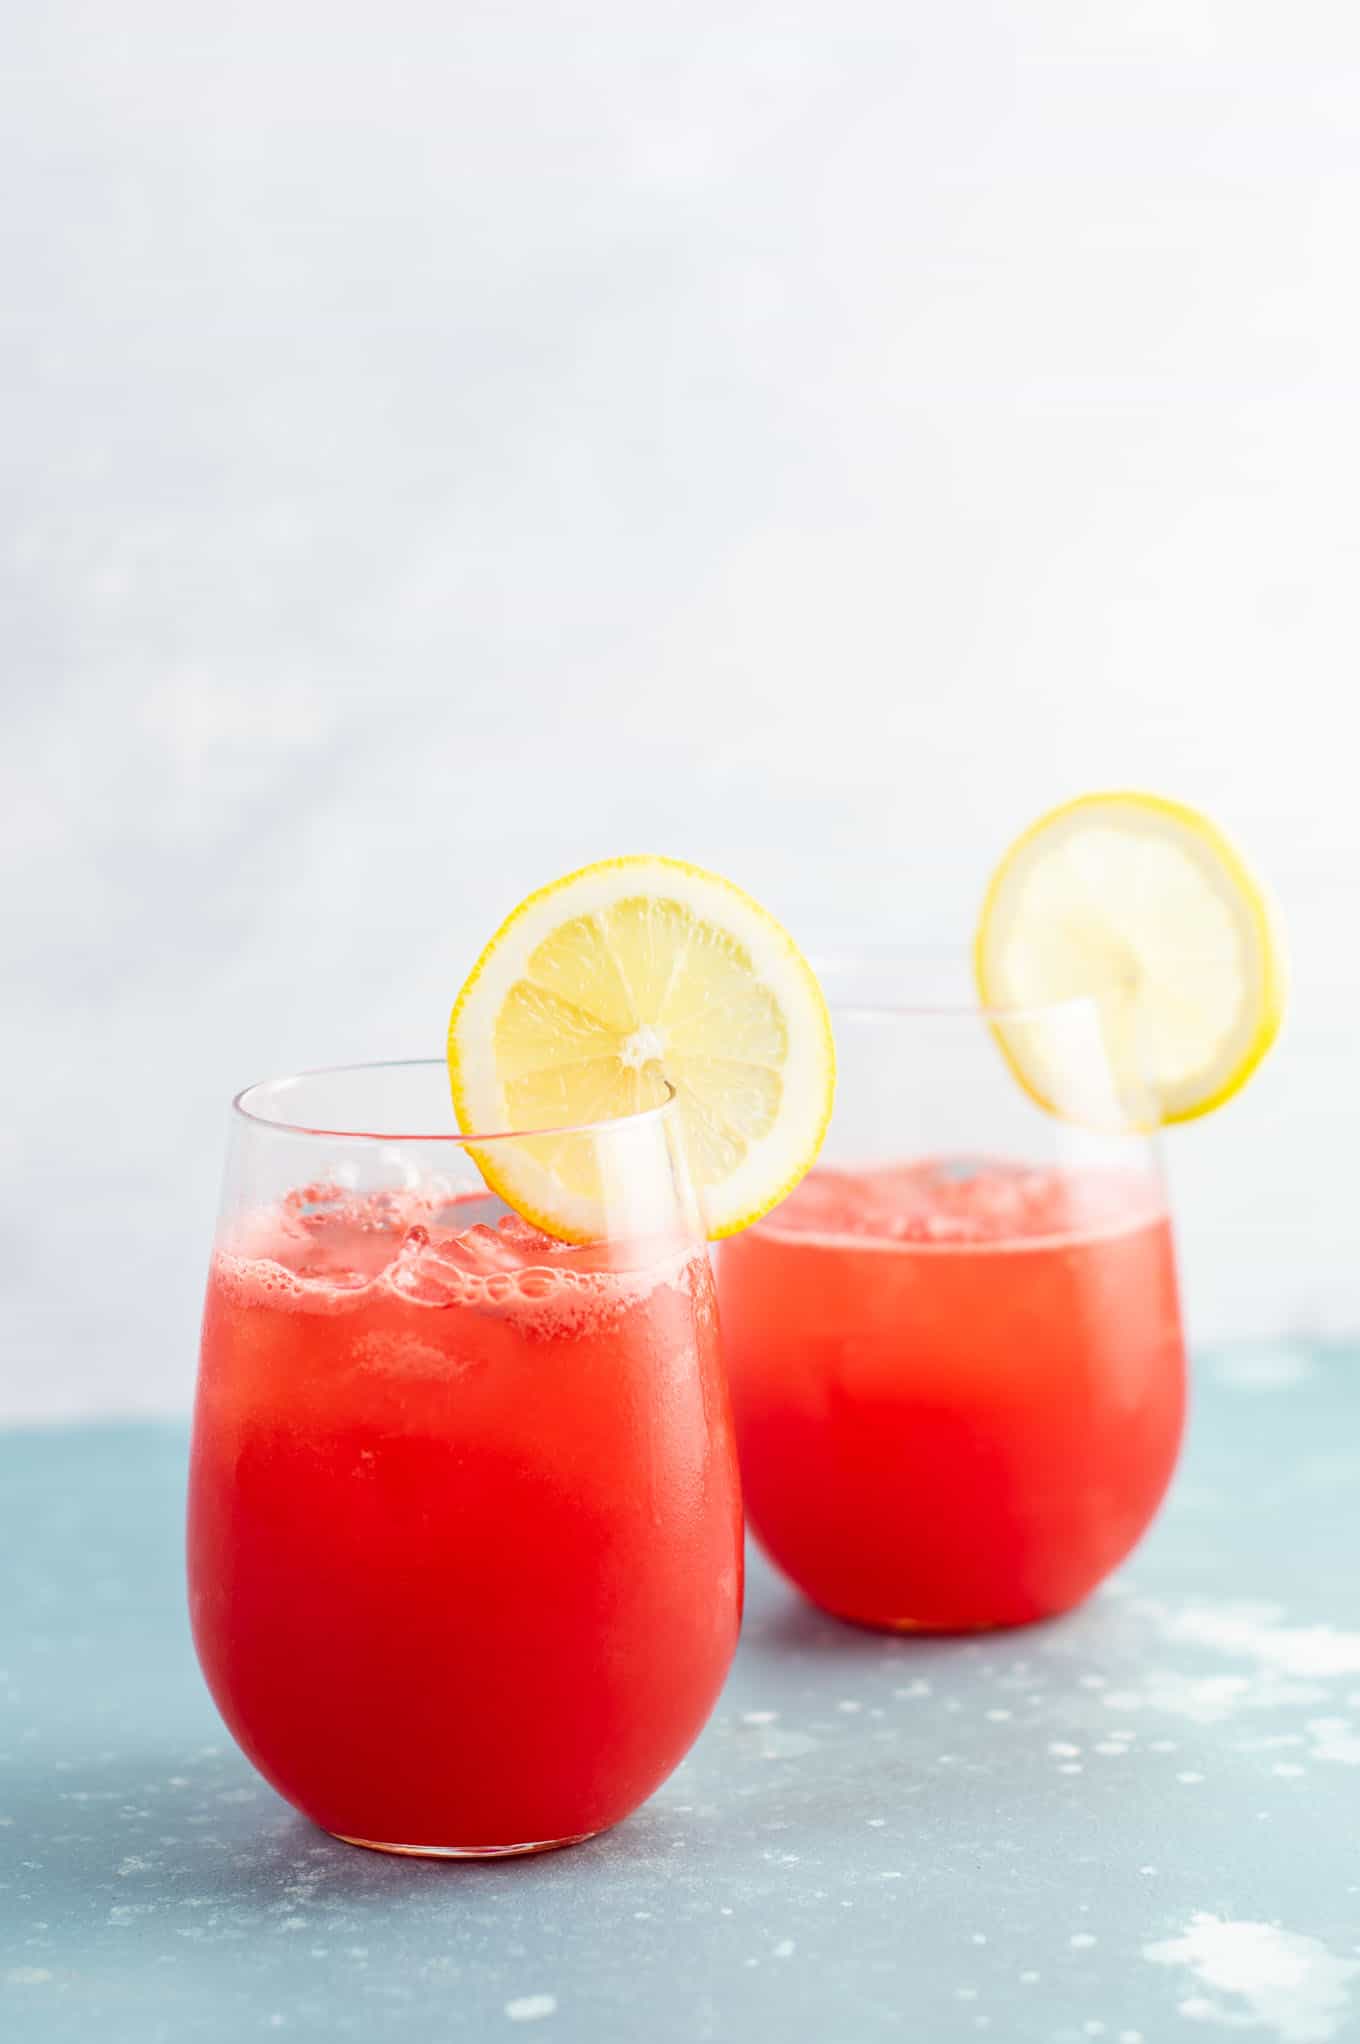 Sparkling watermelon lemonade recipe (naturally sweetened) refreshing summer drink! #watermelon #lemonade #watermelonlemonade #healthydrink #summerdrink #easyrecipe #watermelondrink